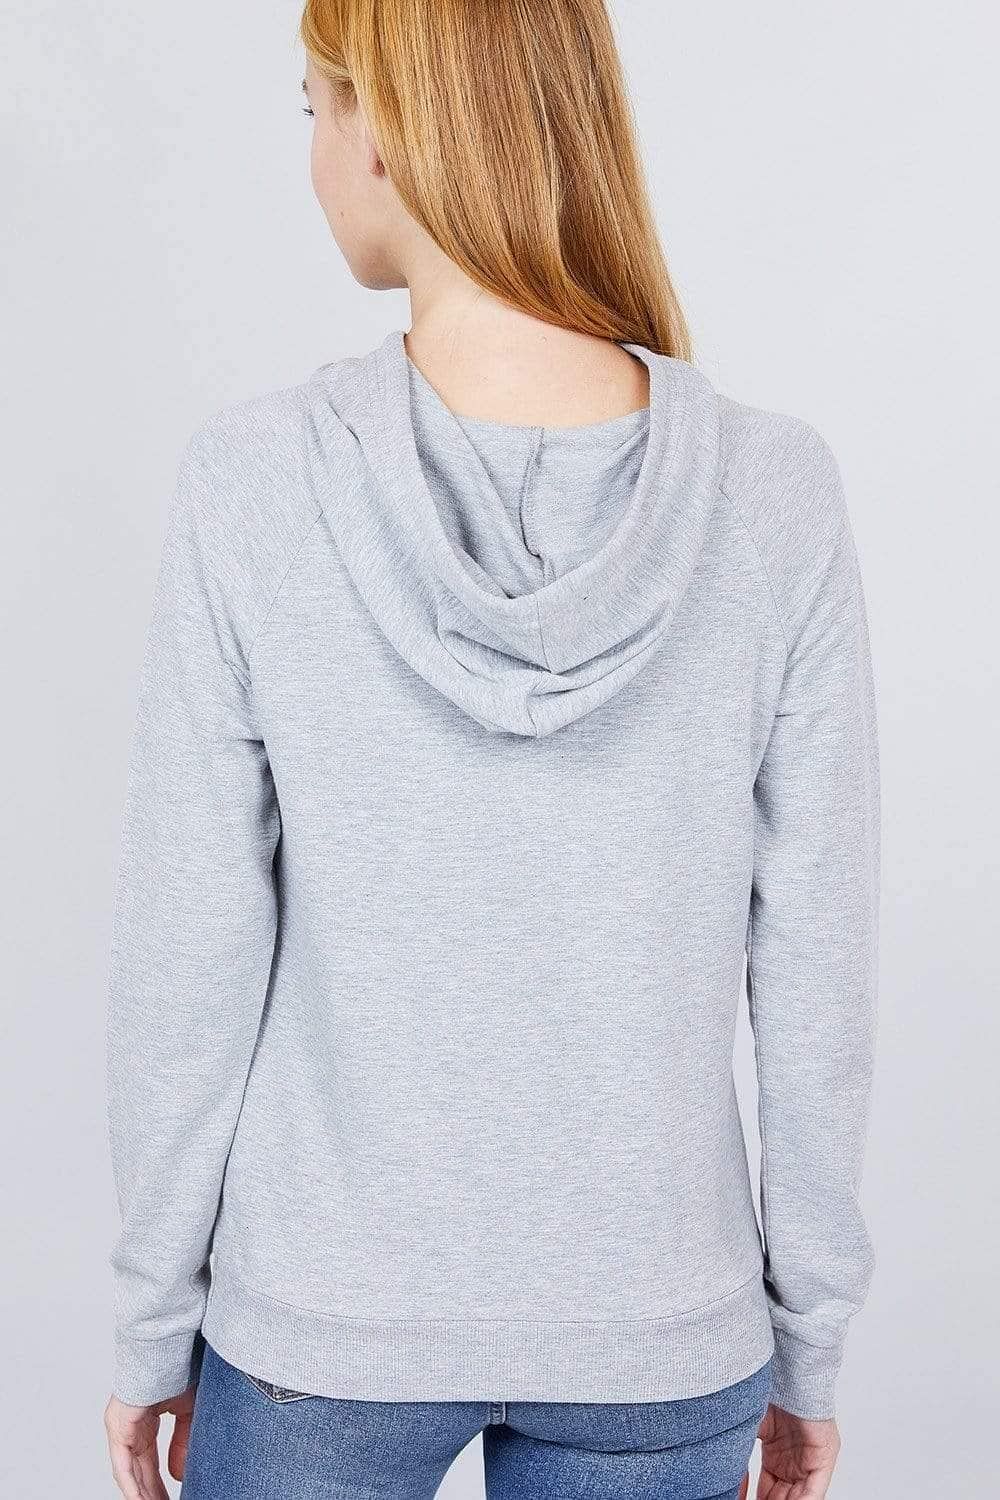 Heather Gray Long Sleeve French Terry Sweatshirt - Shopping Therapy, LLC Sweatshirt